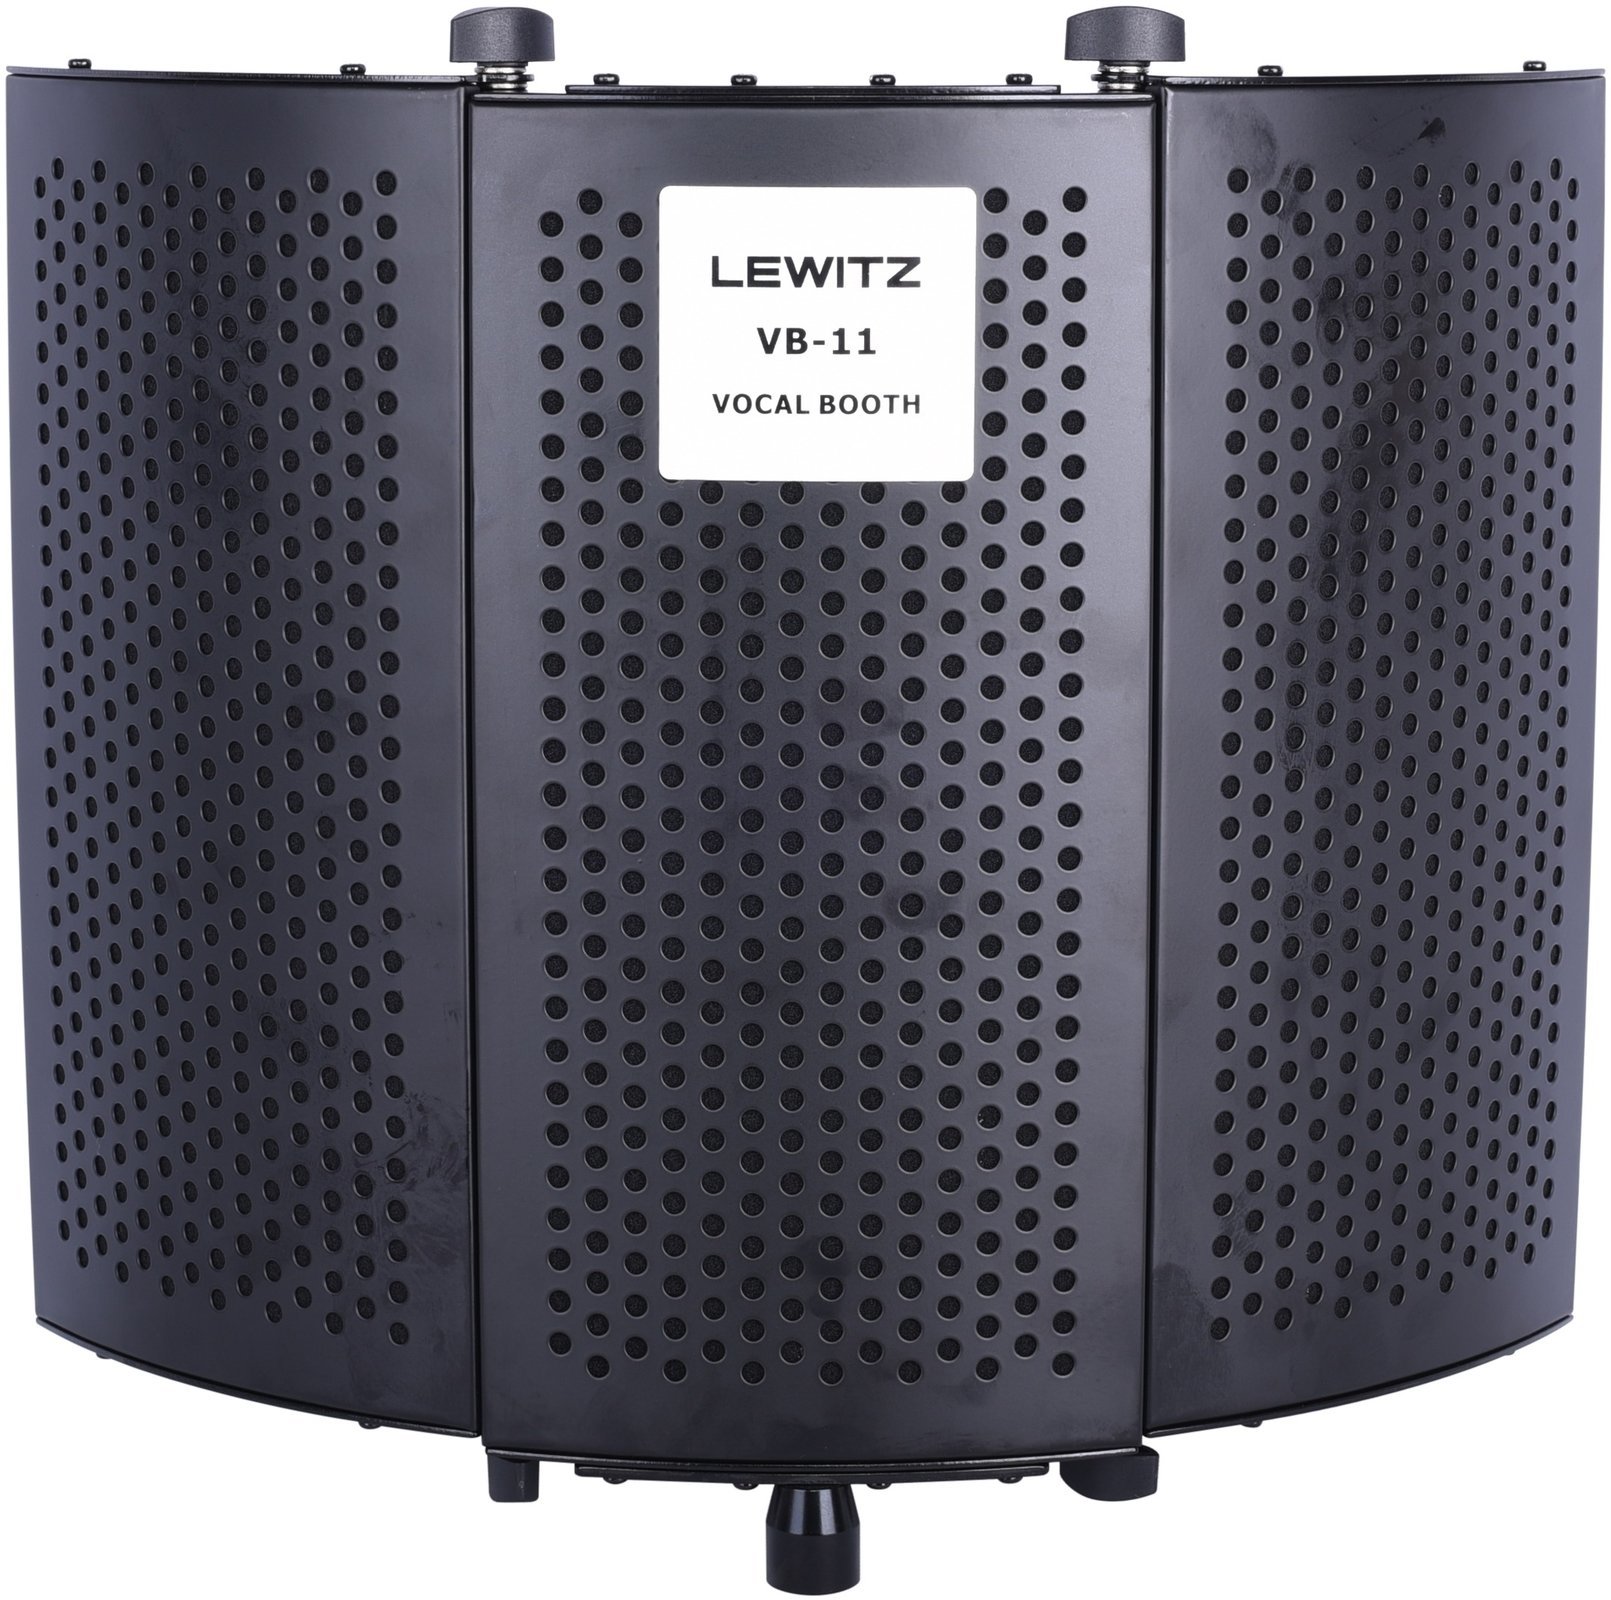 Portable acoustic panel Lewitz VB-11